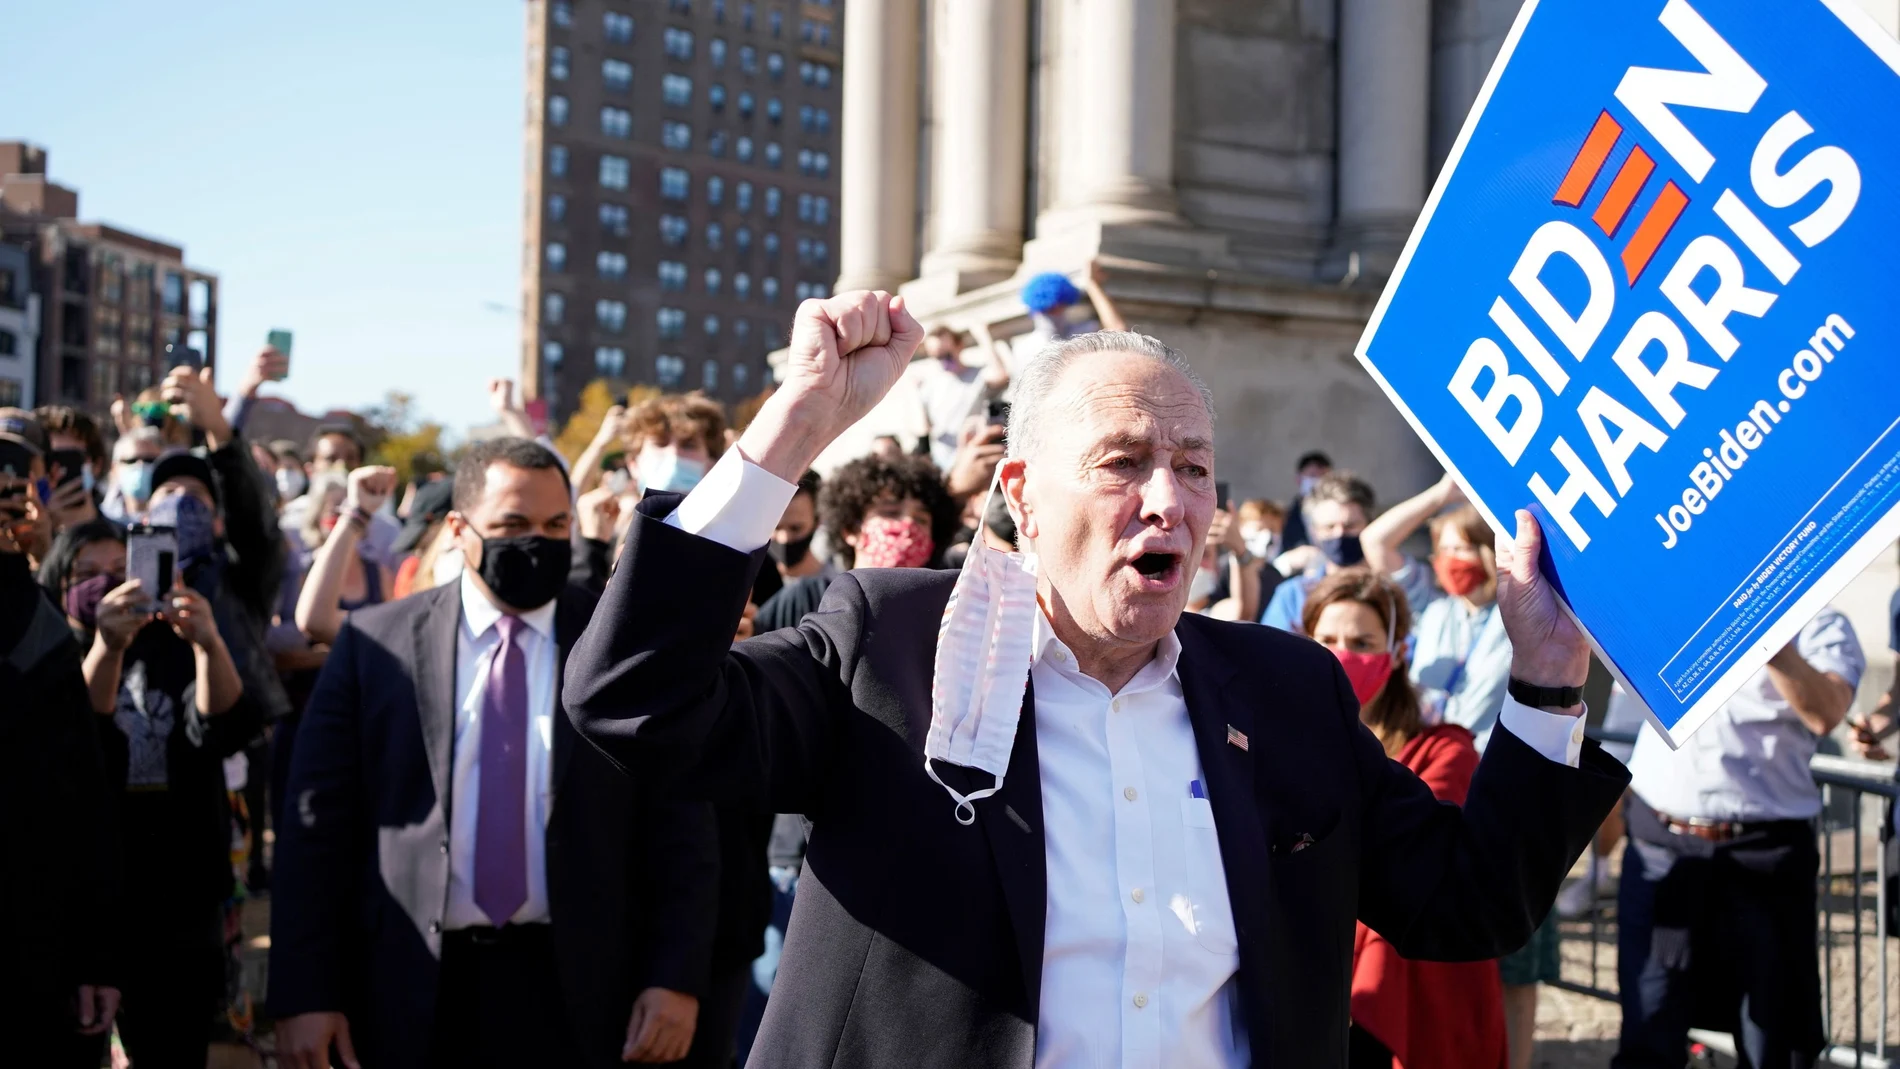 Senate Minority Leader Chuck Schumer (D-NY) celebrates as media announce that Democratic U.S. presidential nominee Joe Biden has won the 2020 U.S. presidential election in the Brooklyn borough of New York City, U.S., November 7, 2020. REUTERS/Dane Rhys